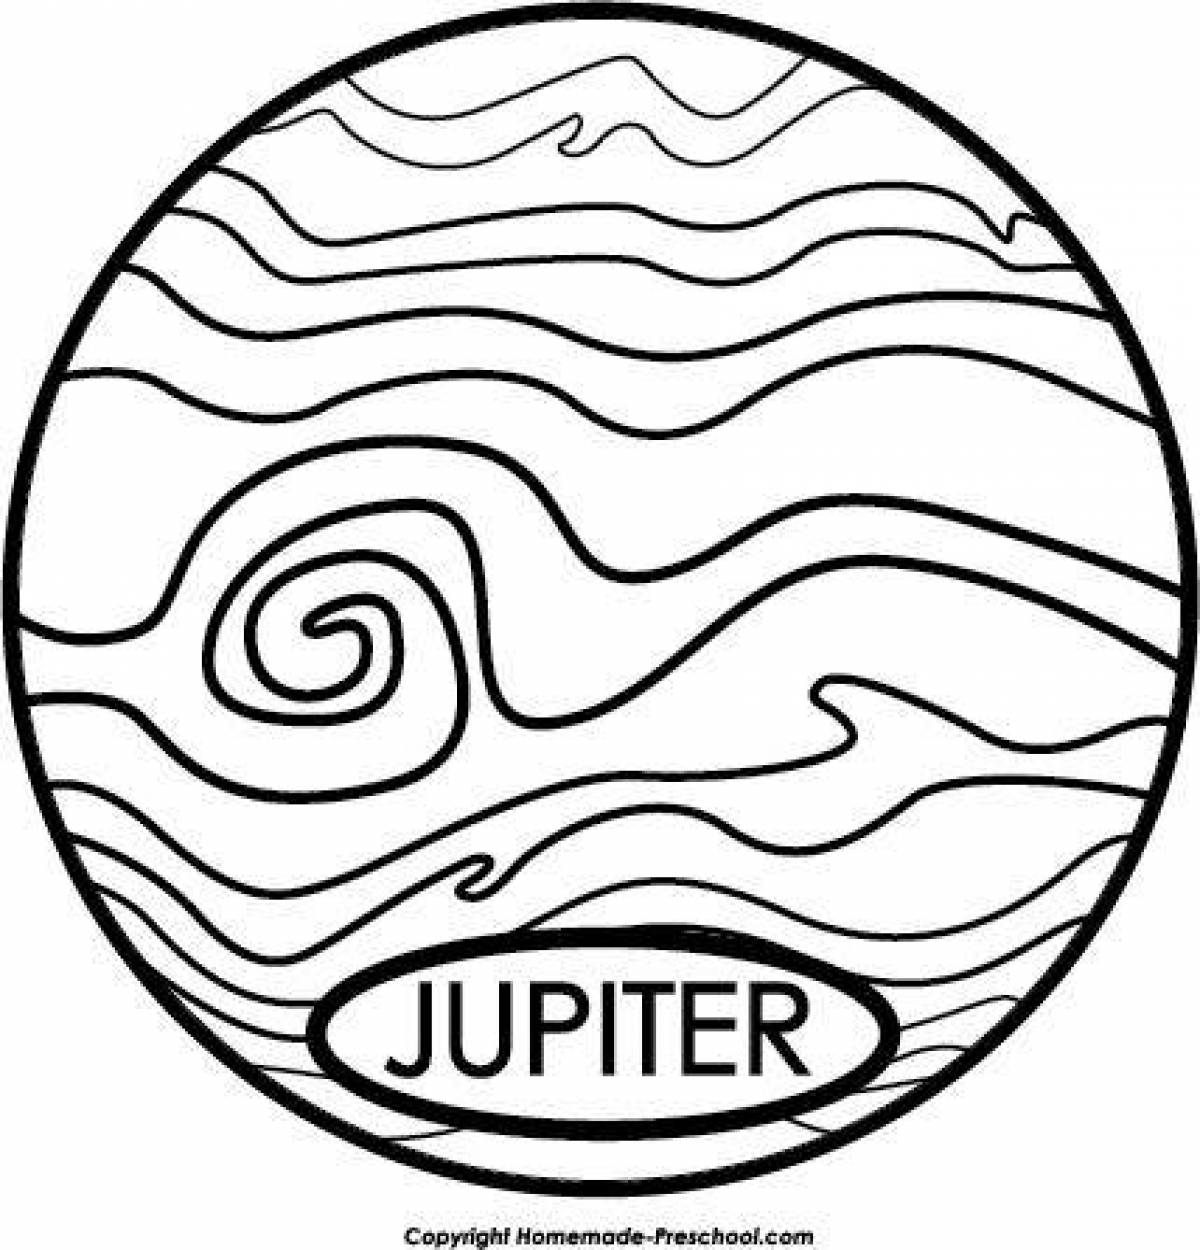 Glittering Jupiter coloring page